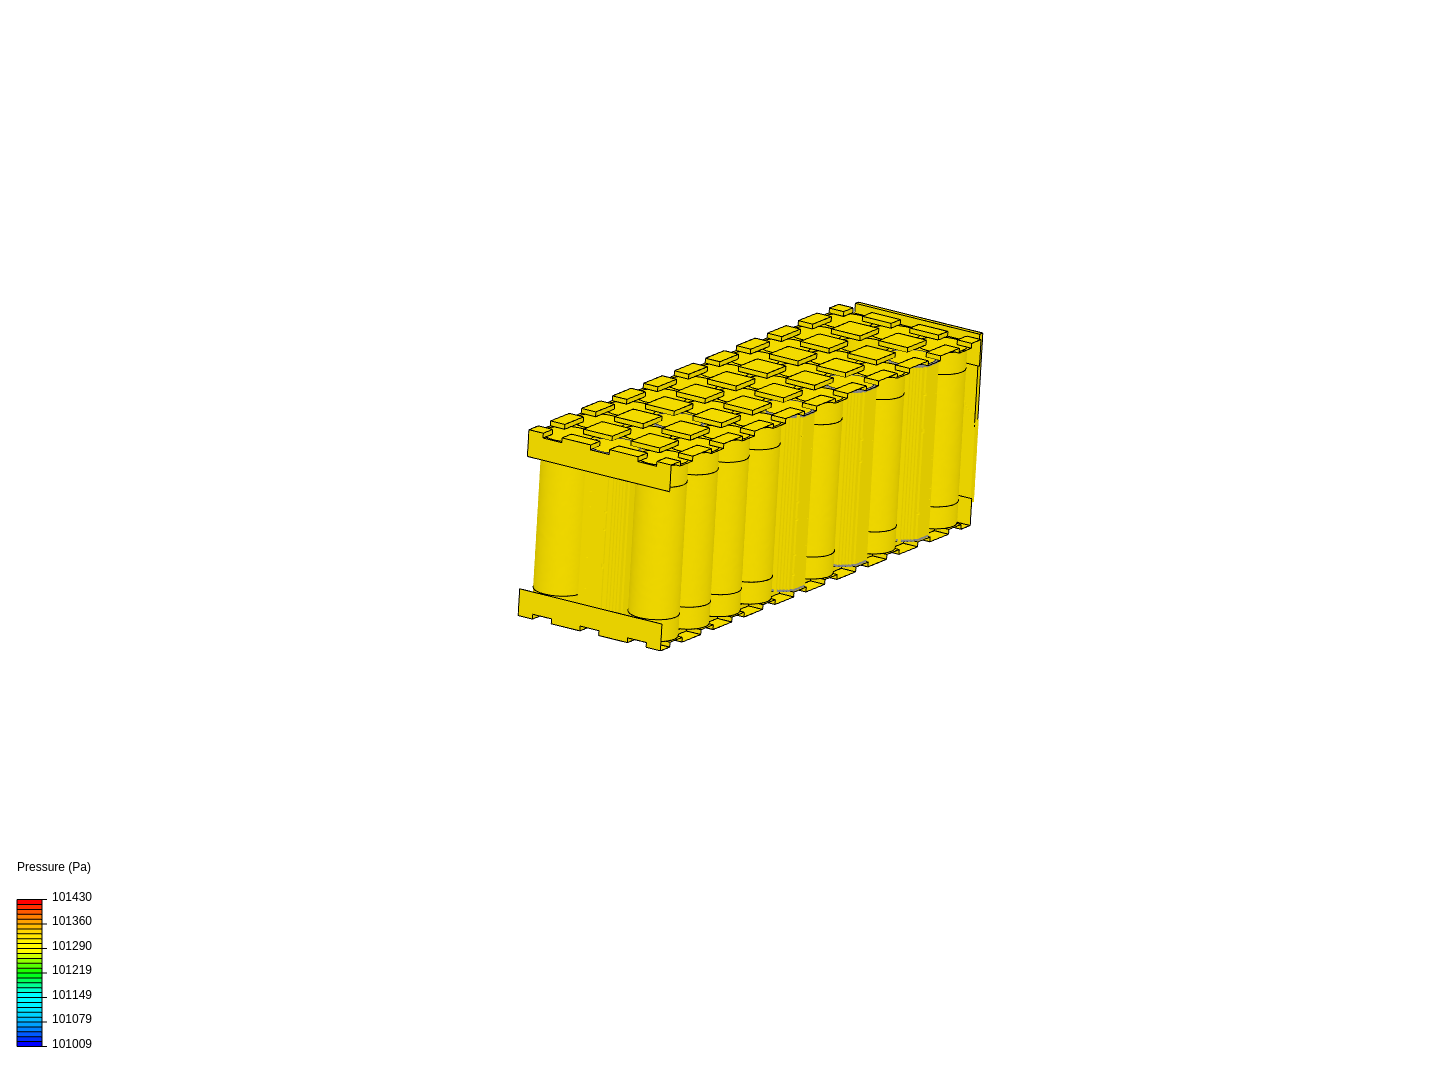 Li-On Battery Pack - Simple casing image